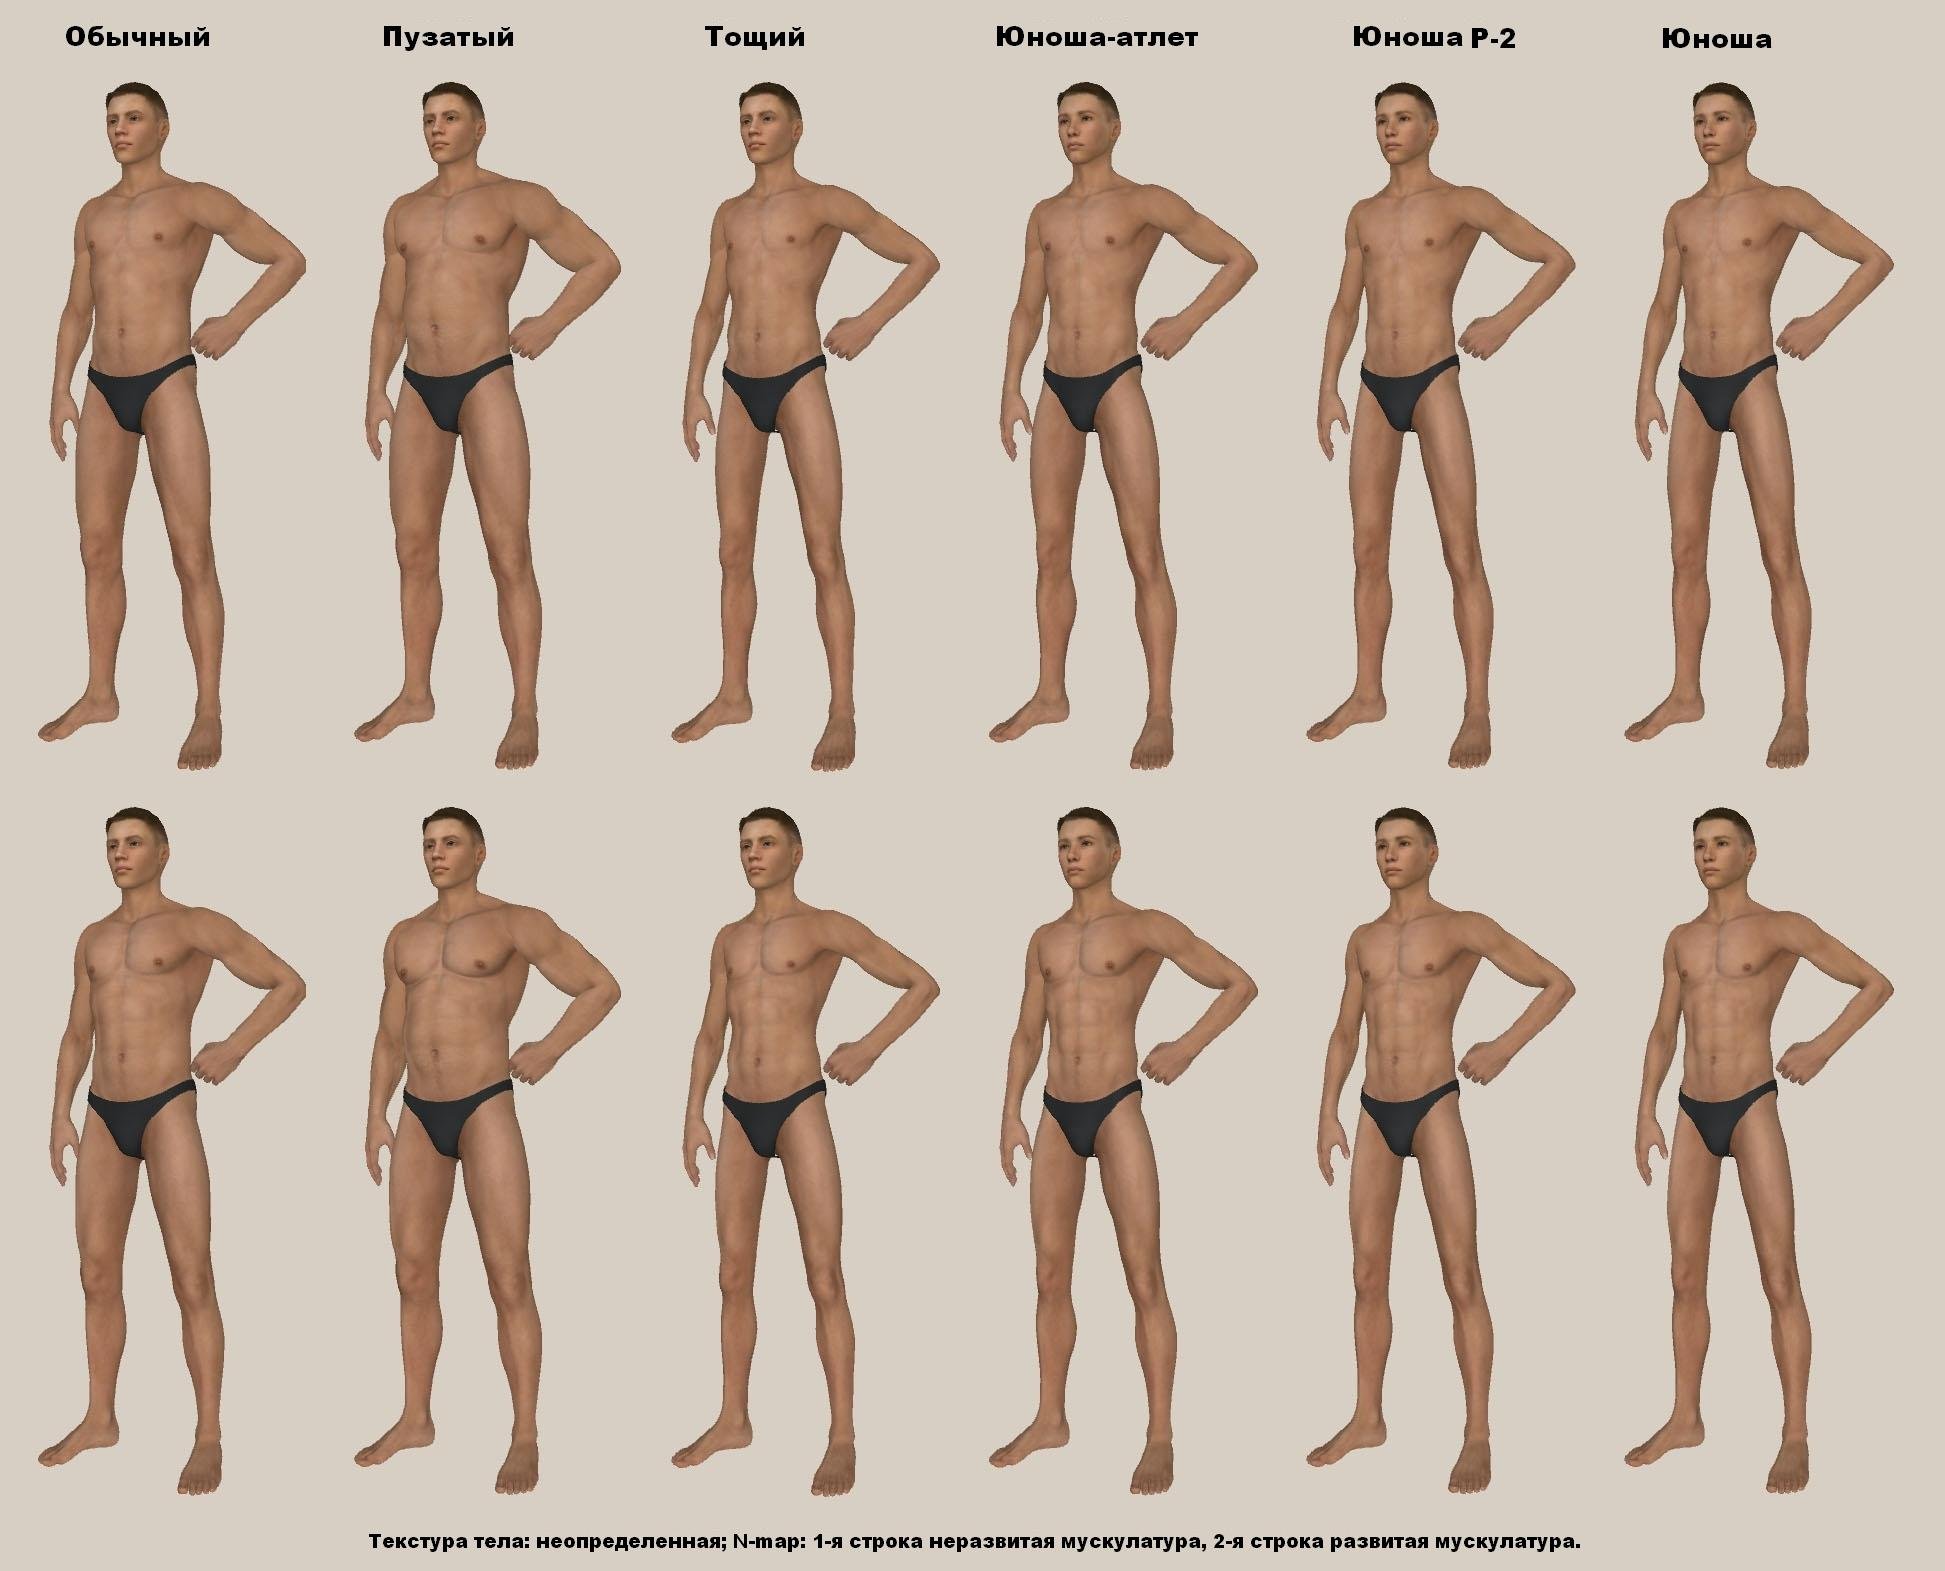 средняя окружность груди у мужчин фото 110